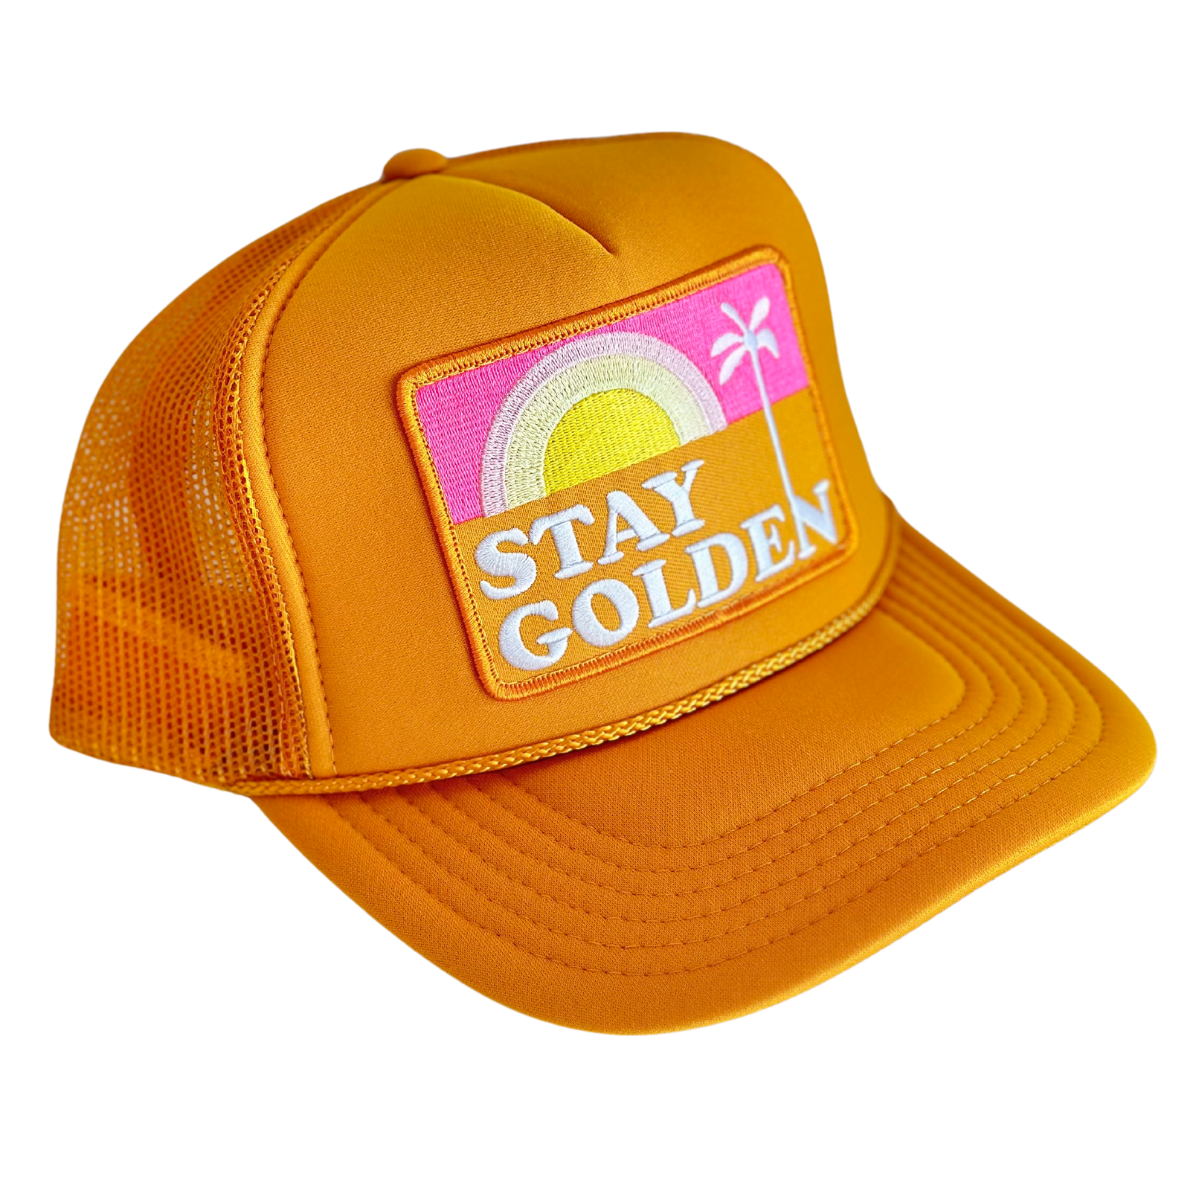 Stay Golden Patch Trucker Hat